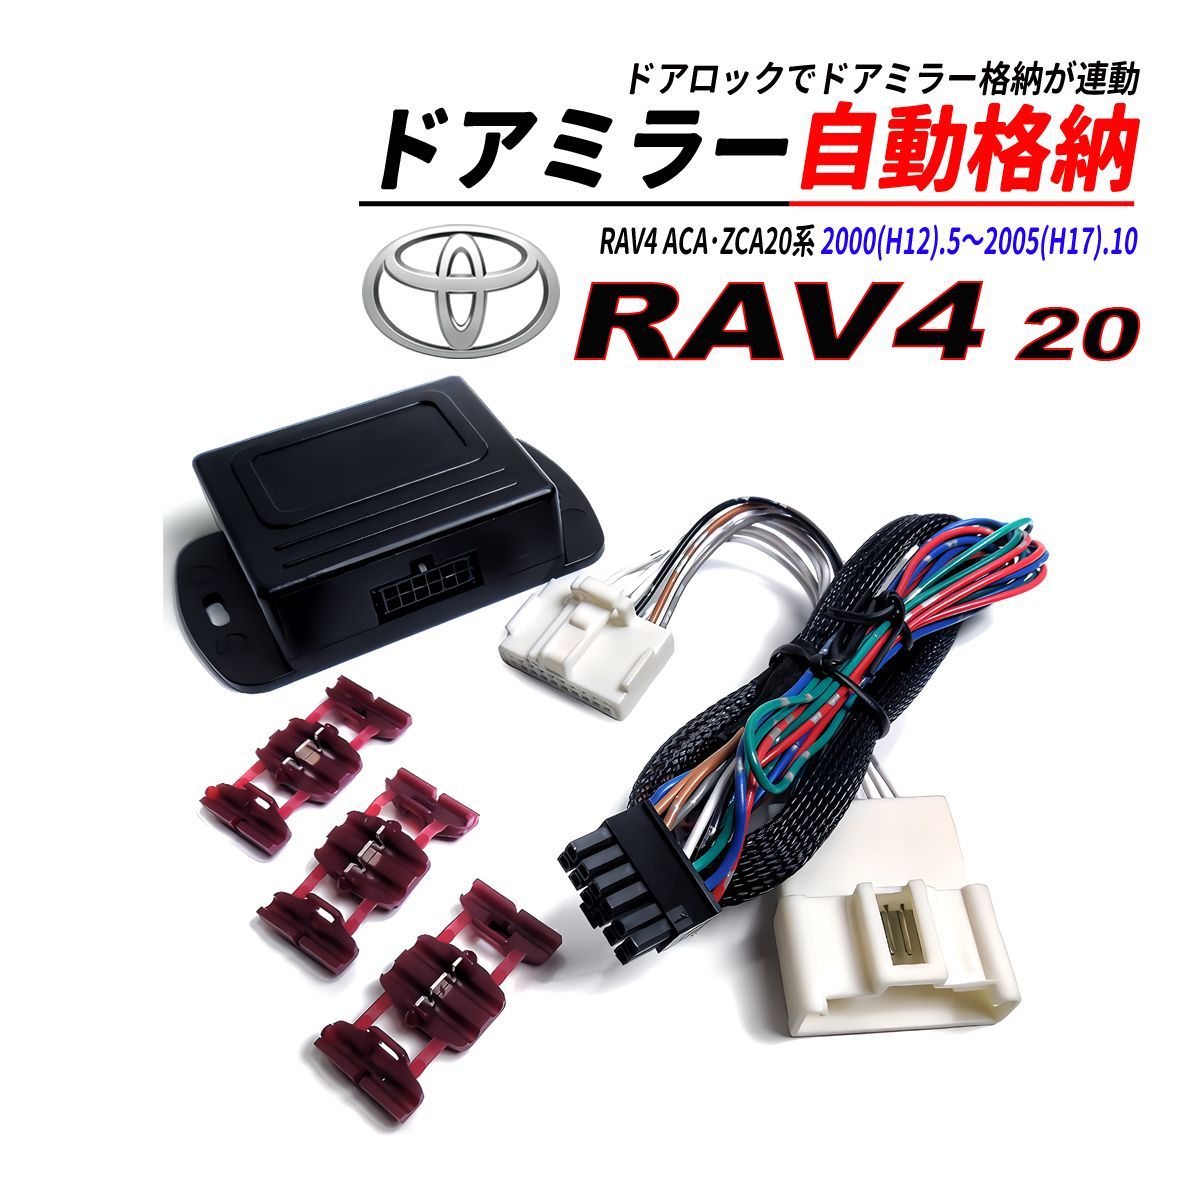 RAV4 ACA ZCA 20 ドアミラー 自動格納 キット Aタイプ キーレスエントリー対応 - メルカリ